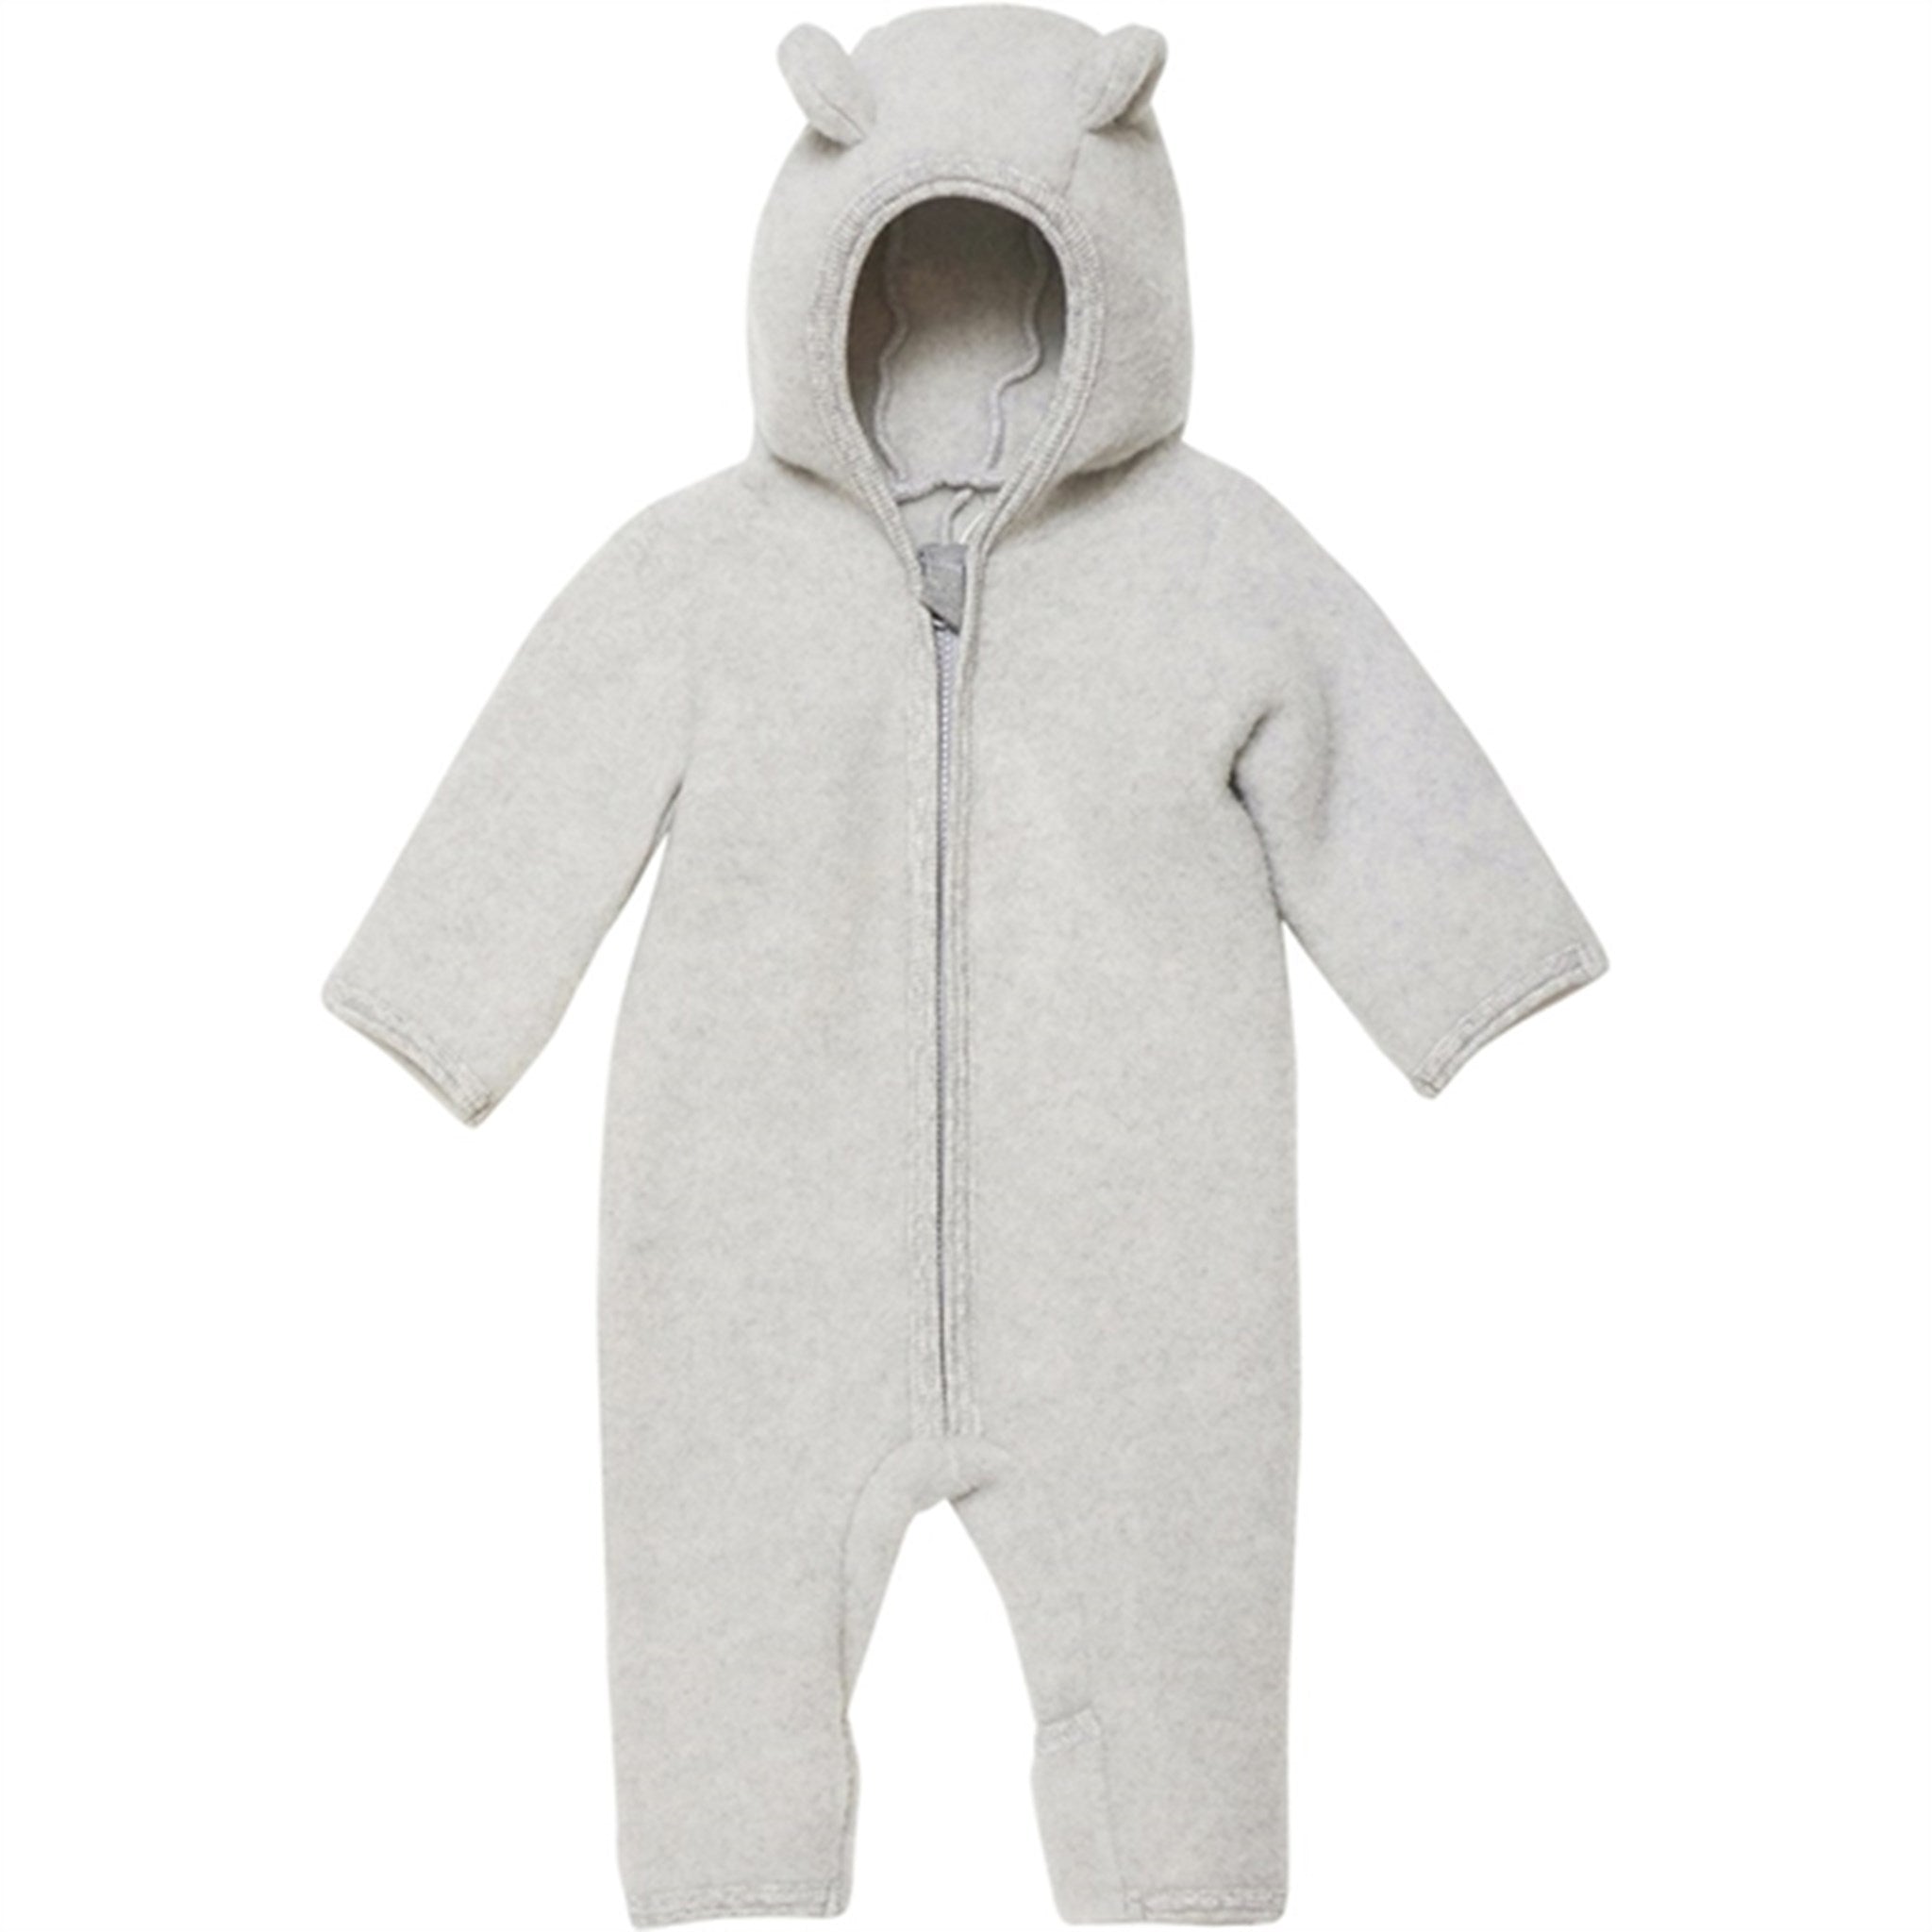 Huttelihut Wool Allie Baby Suit with Ears Light Grey